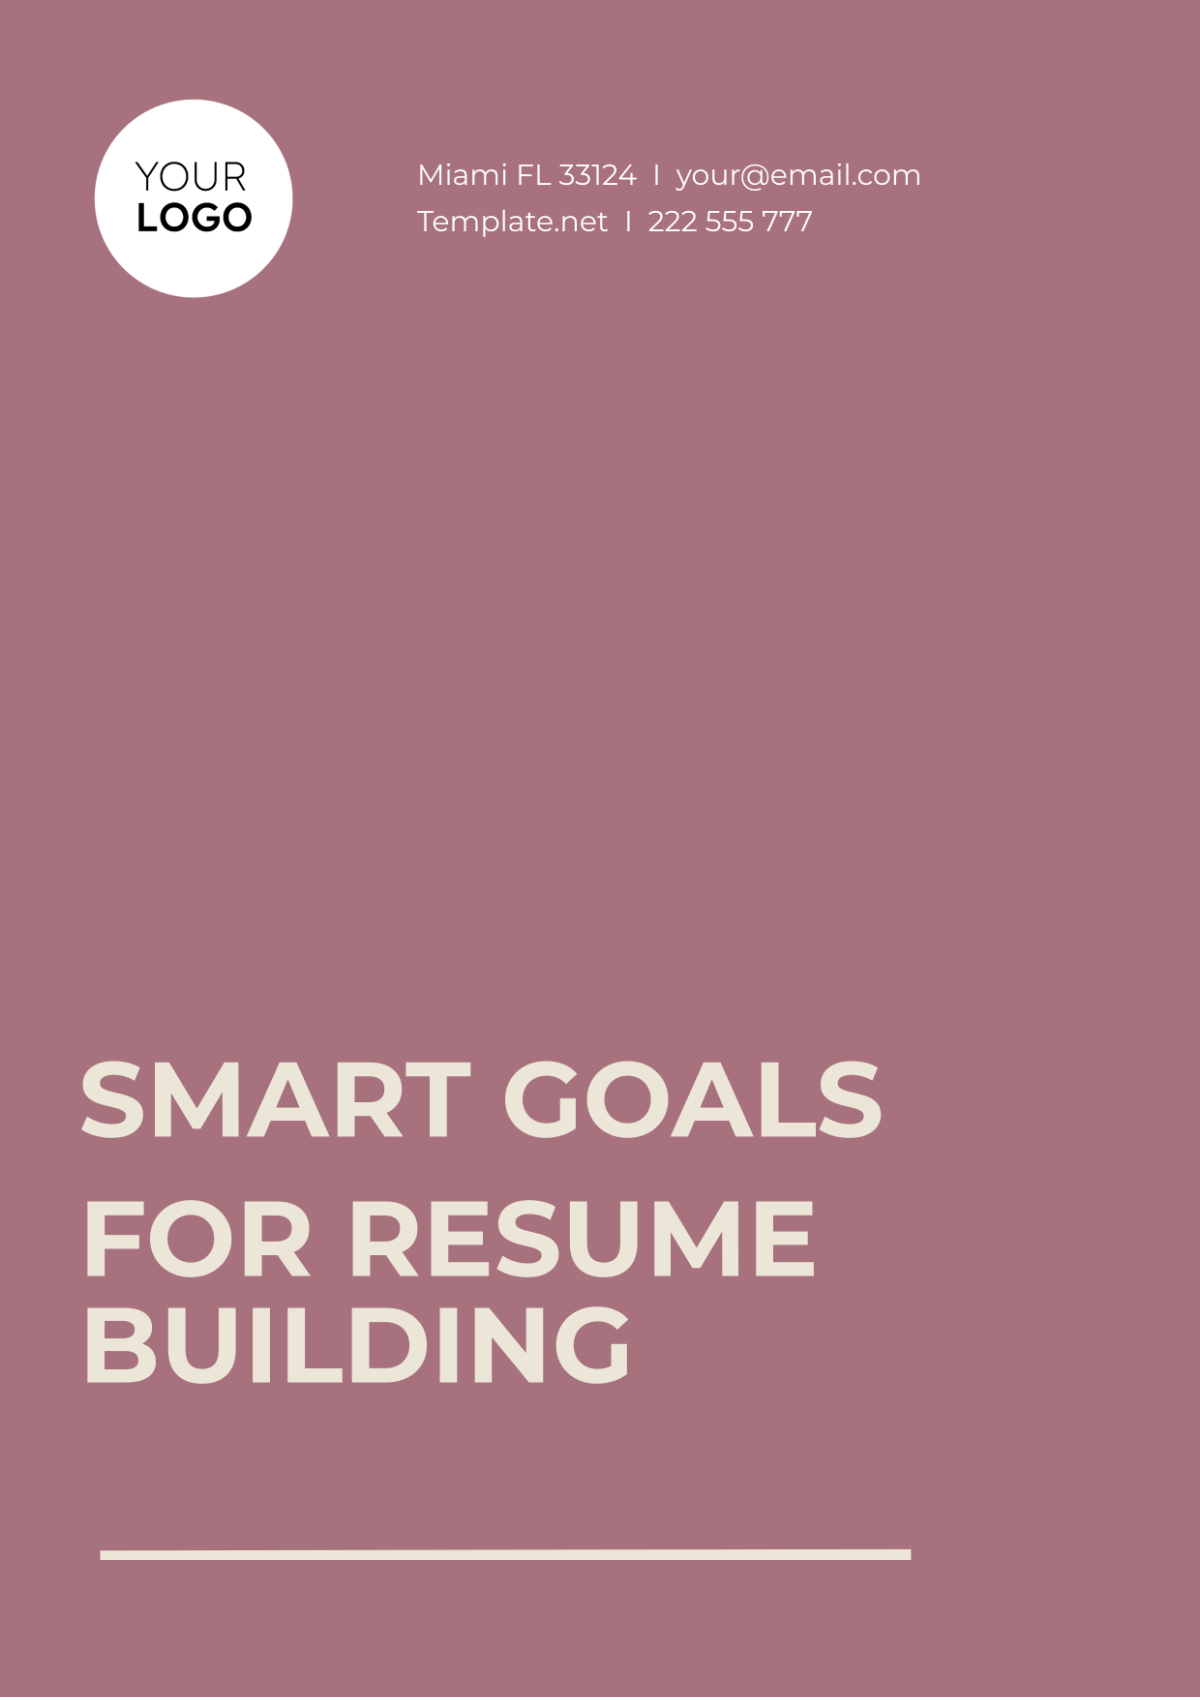 SMART Goals Template For Resume Building